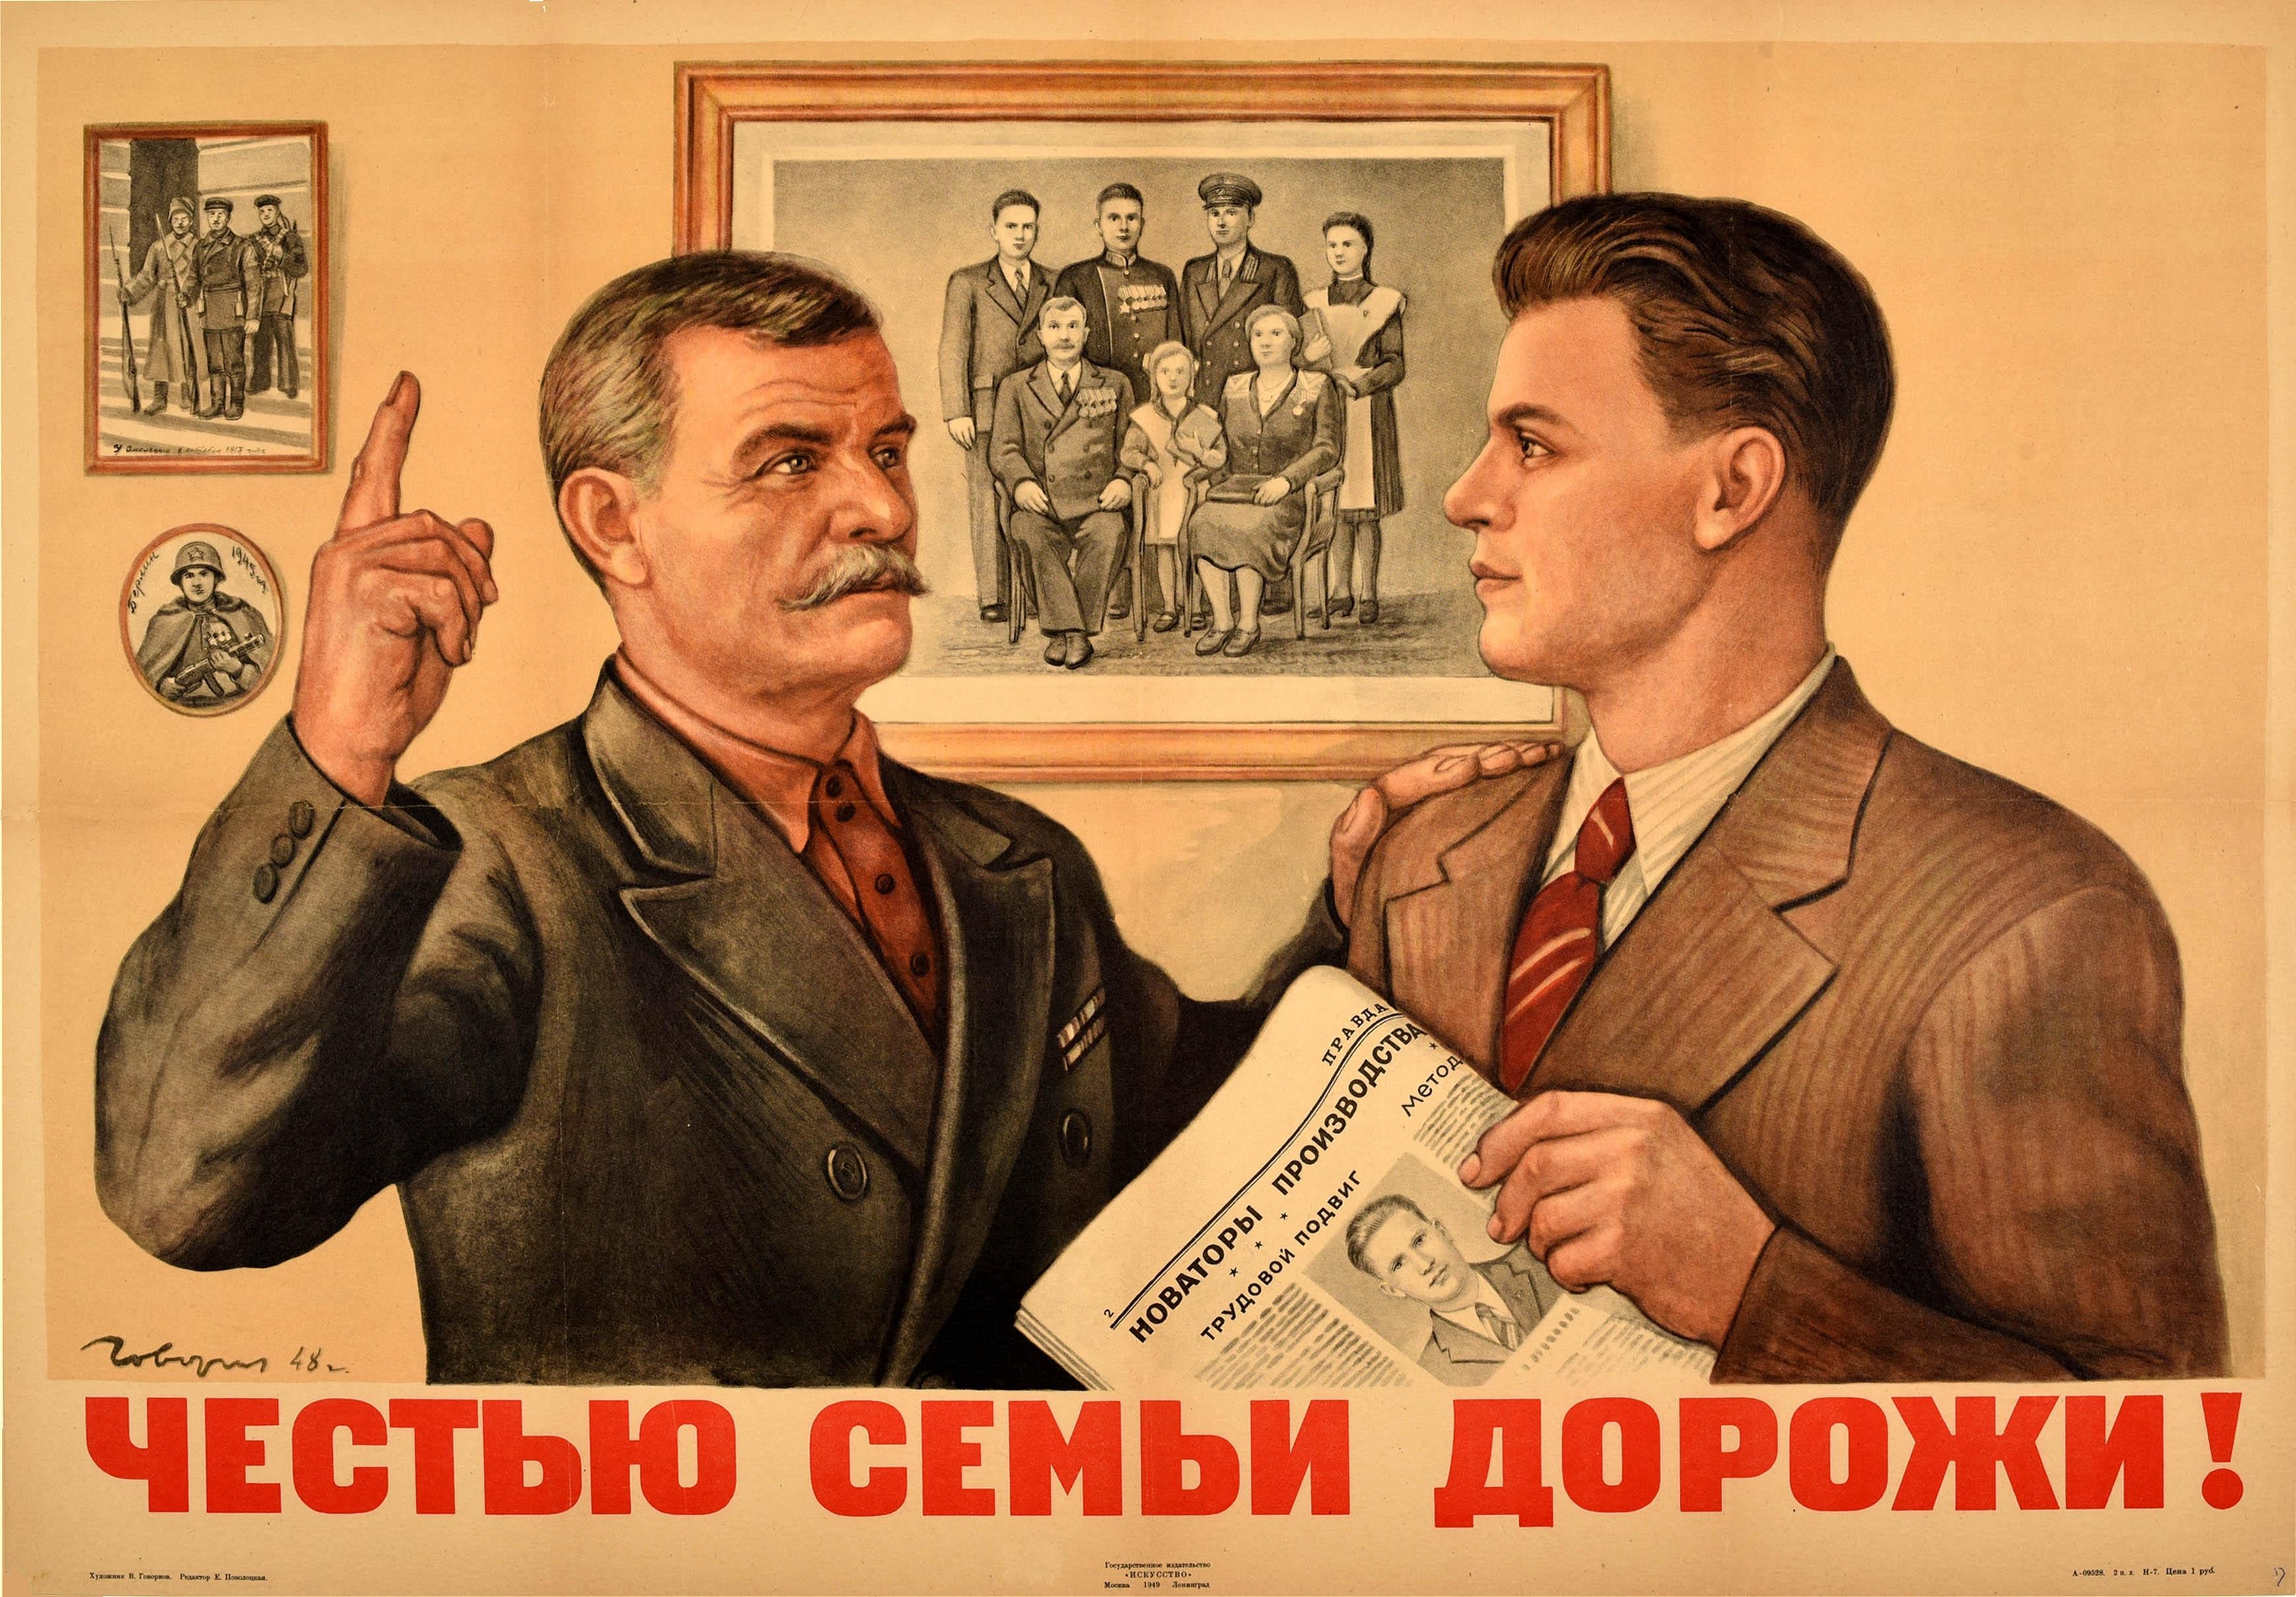 Govorkov Print - Original Vintage Soviet Poster Treasure The Honour Of The Family USSR Propaganda